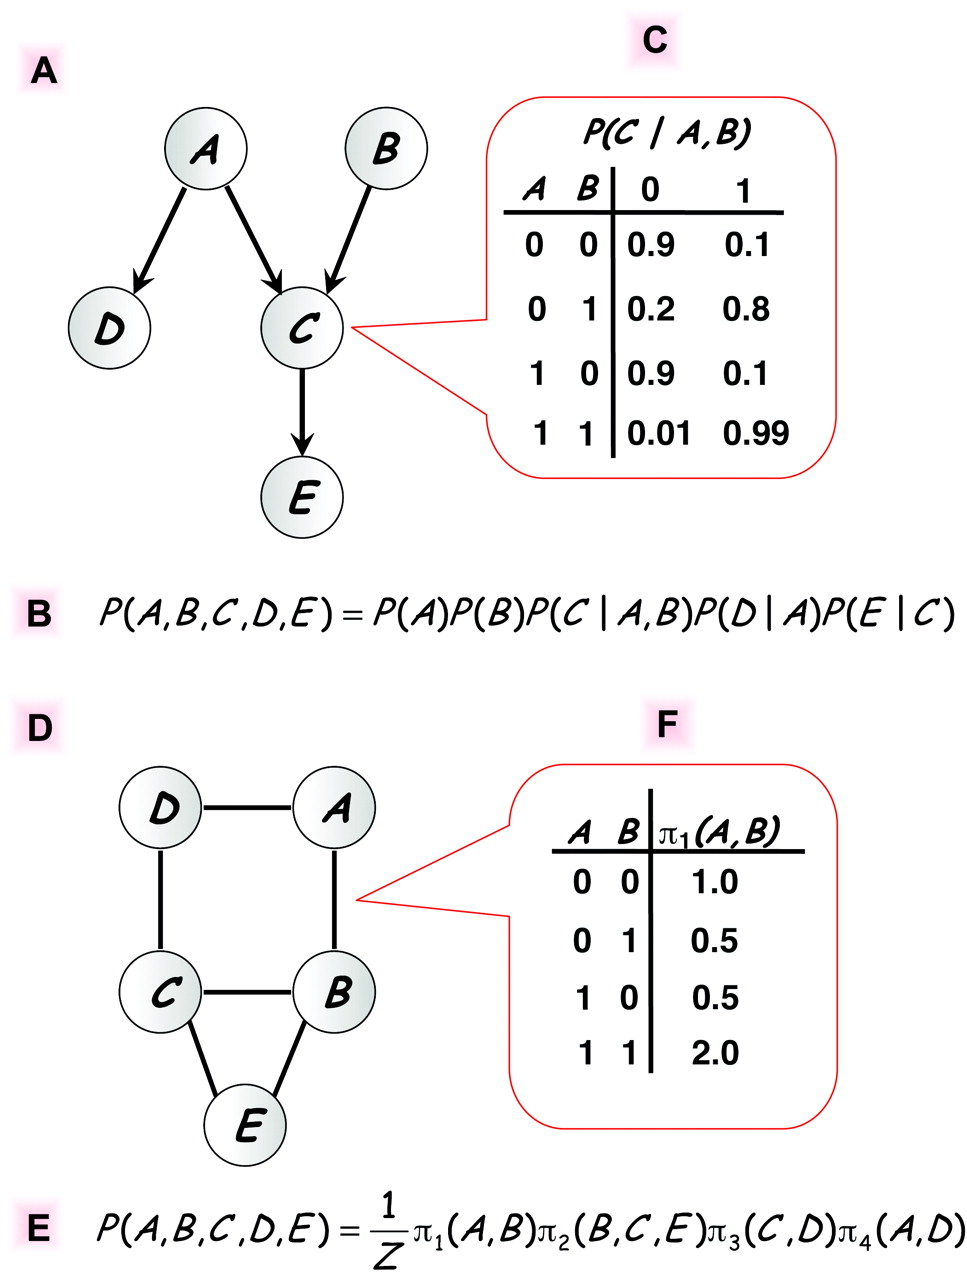 Bayesian networks vs Markov networks